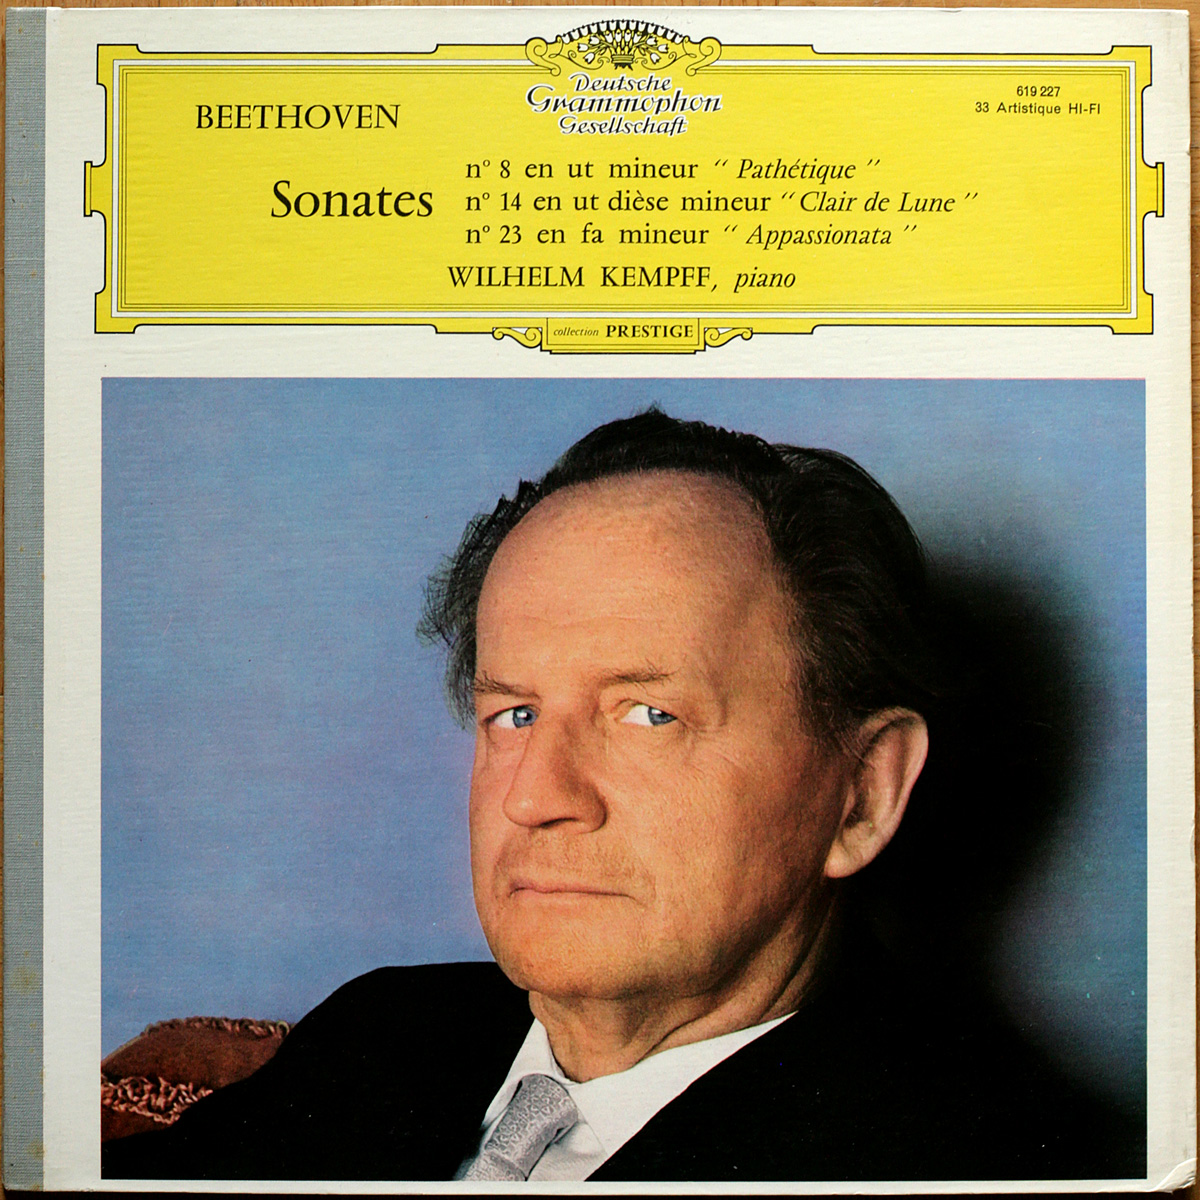 Beethoven • Sonates pour piano • Klaviersonaten • Piano sonatas • N° 14 "Mondschein" – n° 8 "Pathétique" – n° 23 "Appassionata" • DGG 619 227 LPEM • Wilhelm Kempff